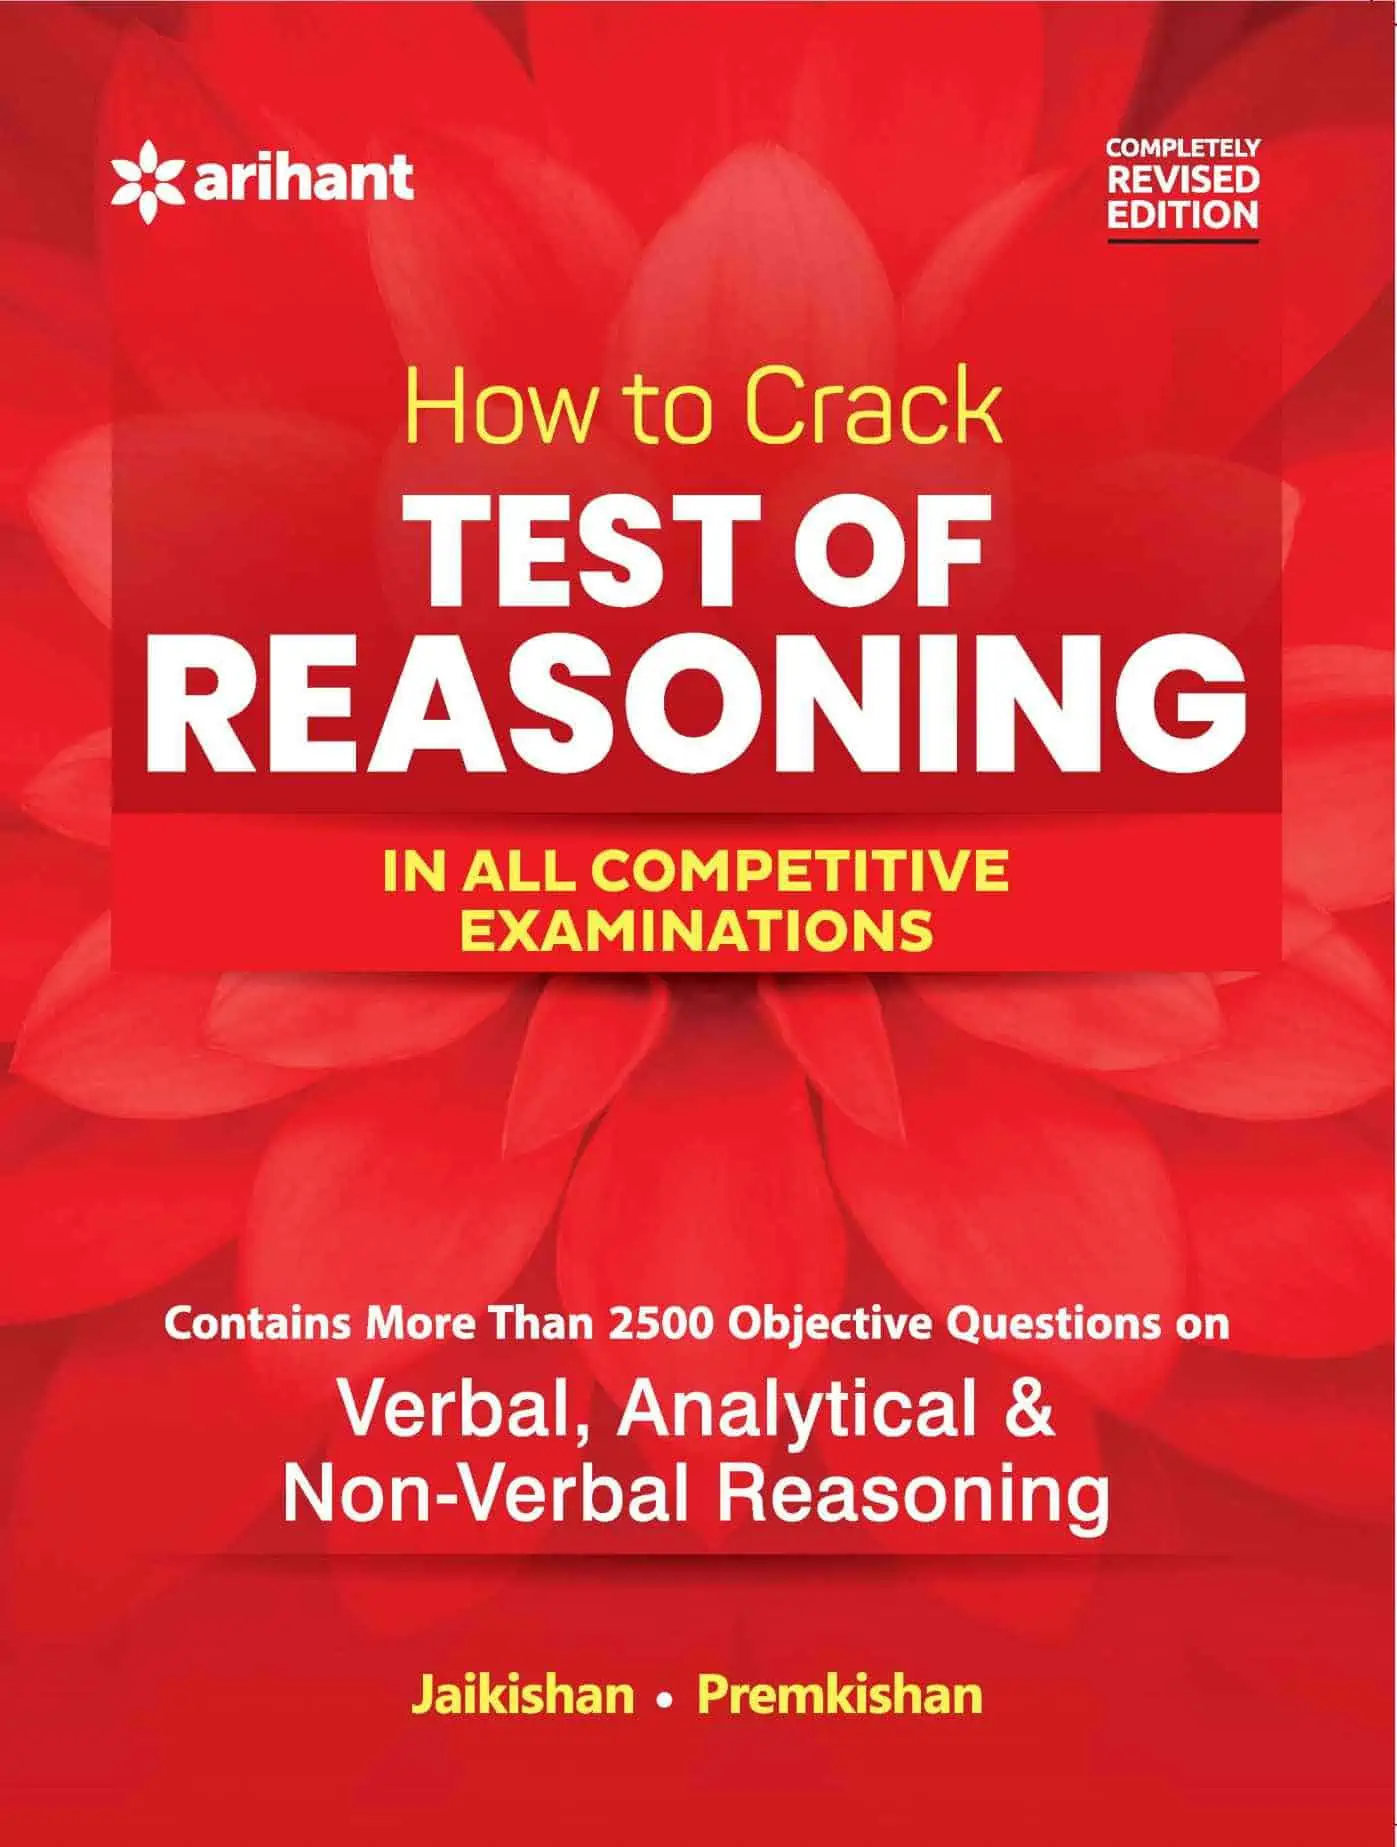 how to crack test of reasoning arihant pdf